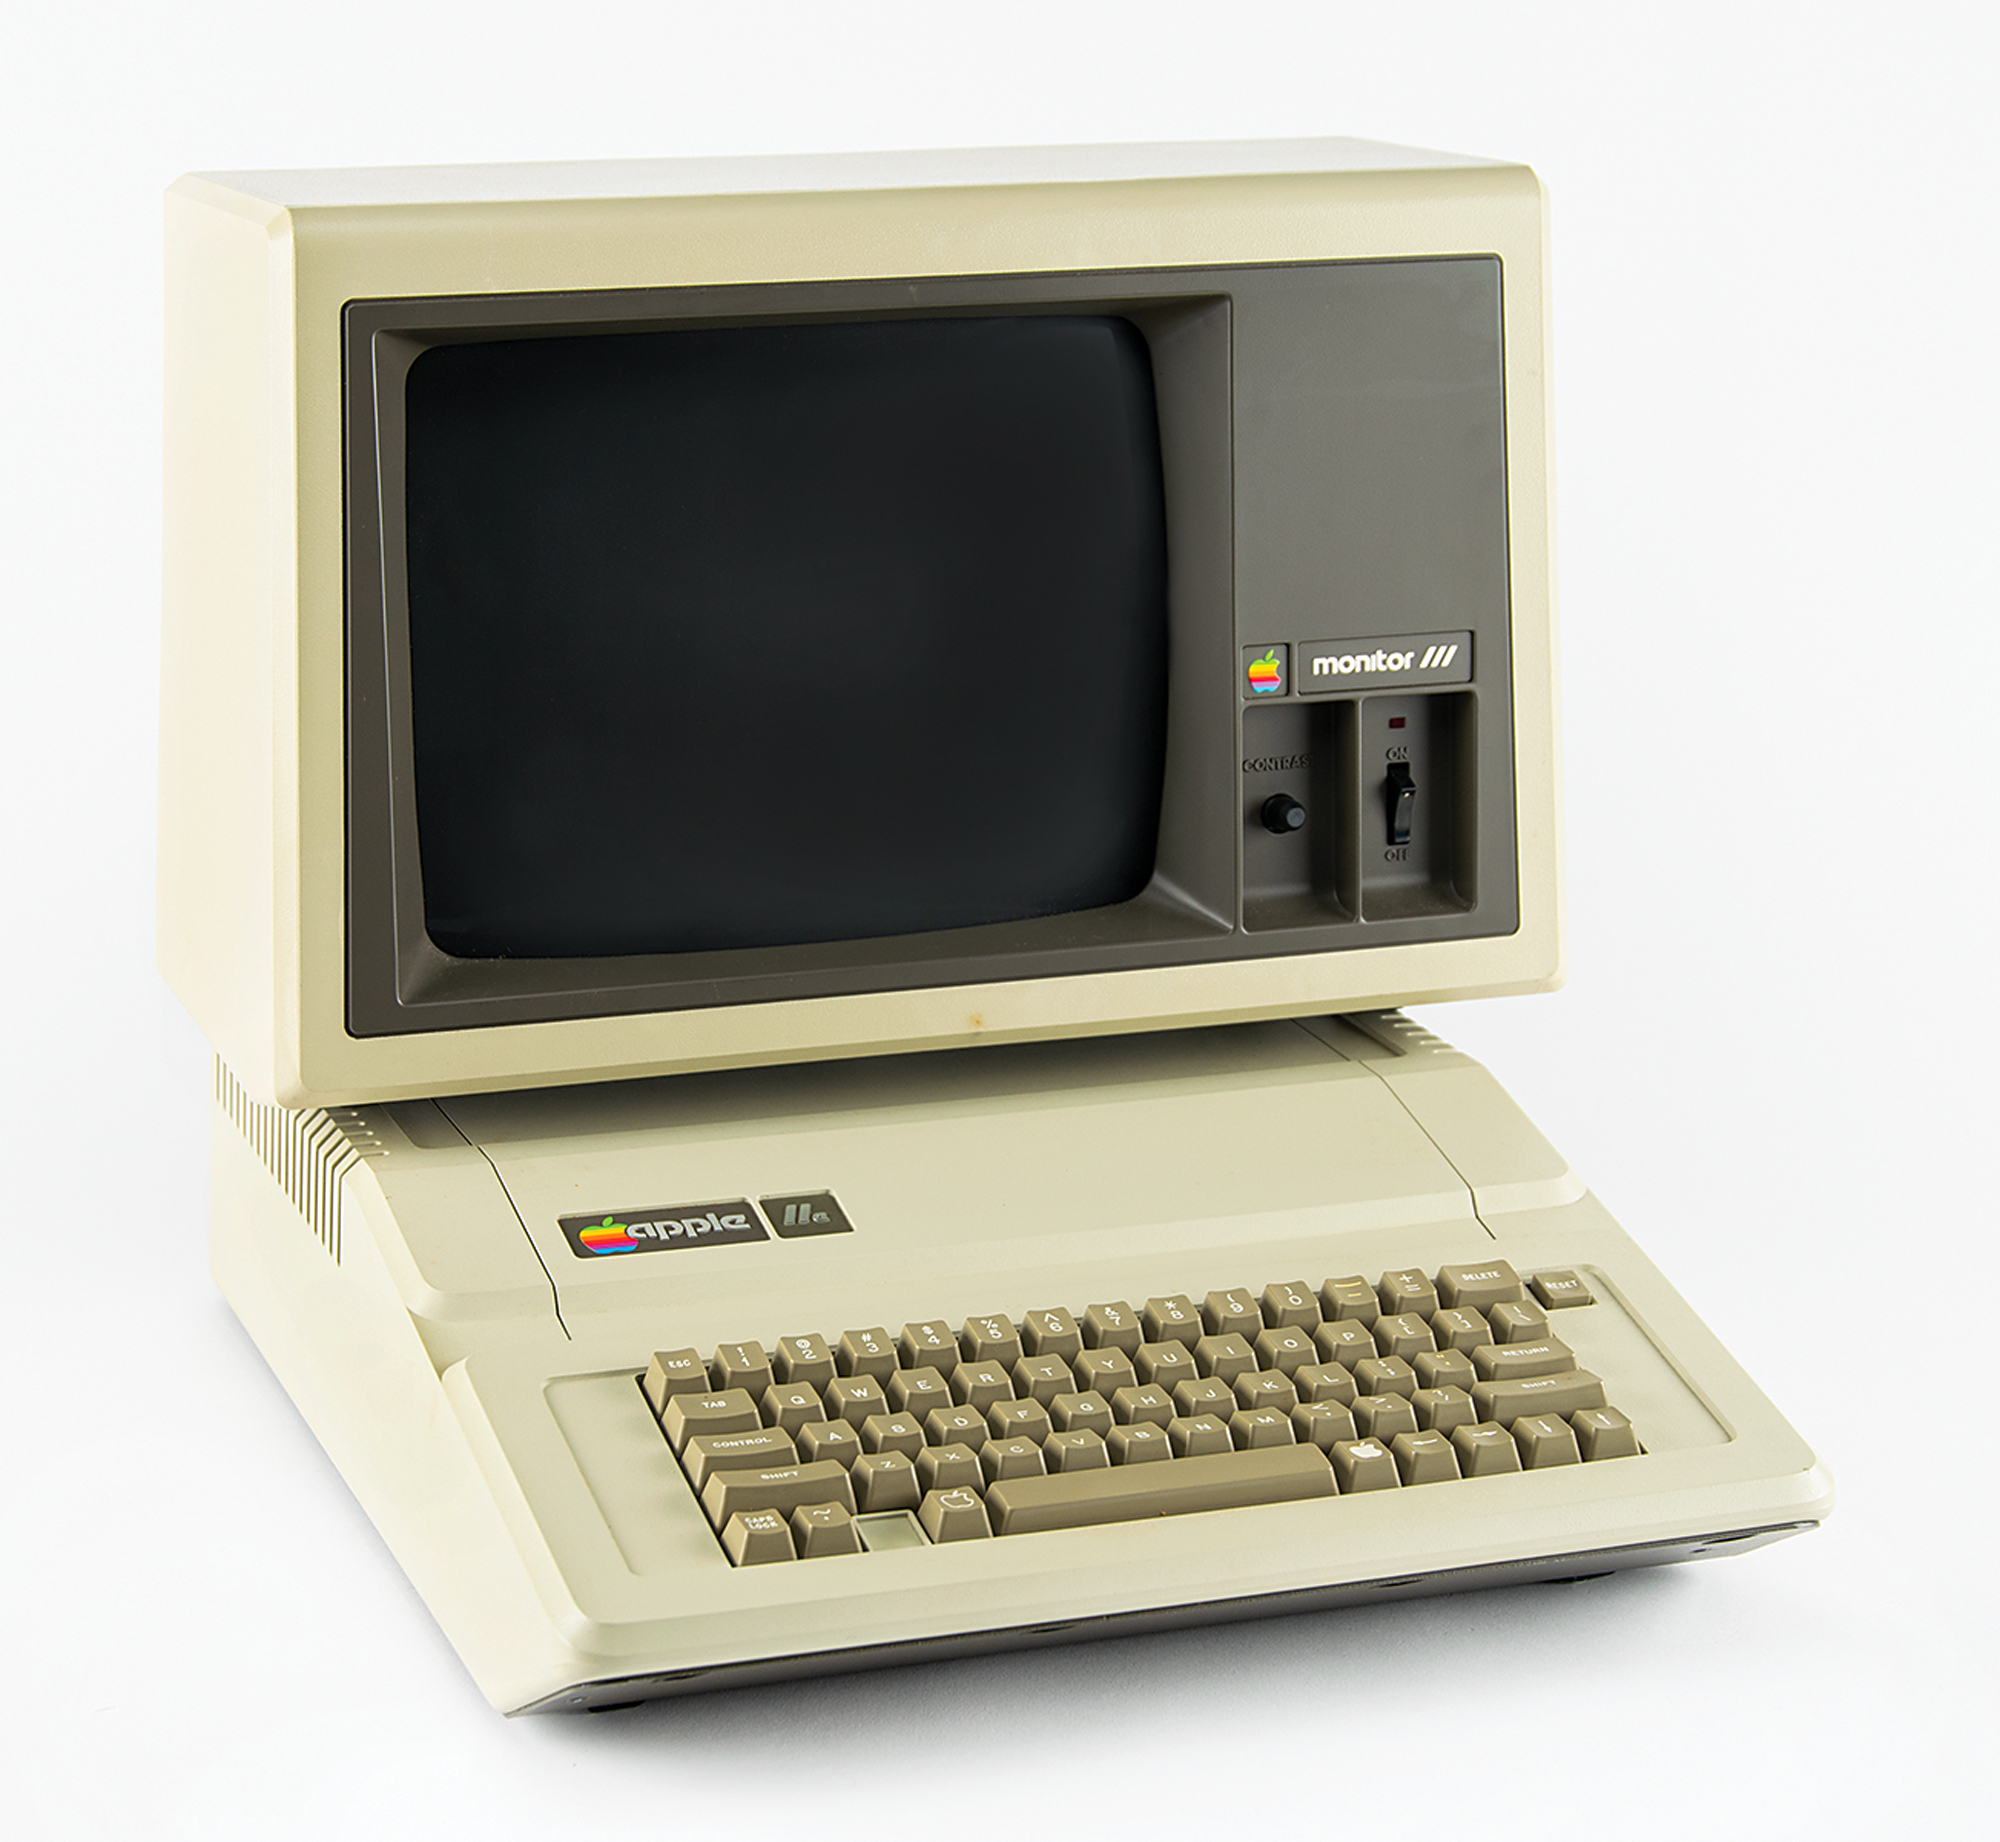 Lot #8012 Apple IIe Computer(Model A2S2064) with Apple III Monitor